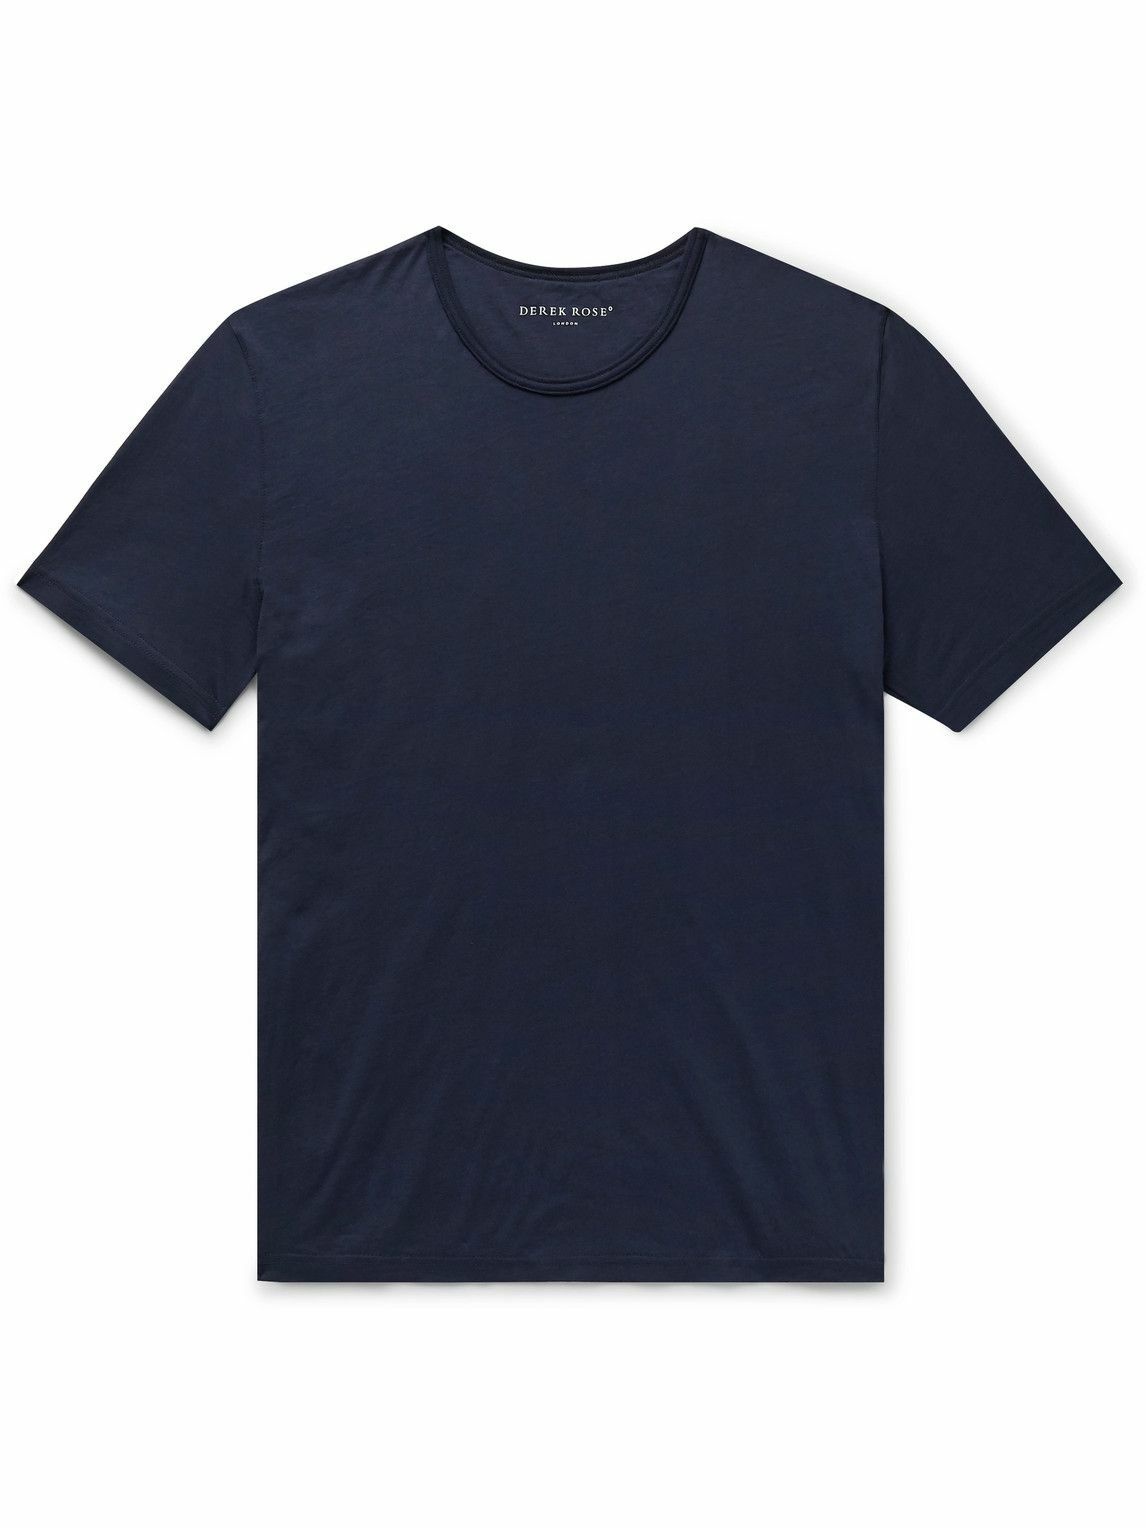 Derek Rose - Riley 1 Pima Cotton-Jersey T-Shirt - Blue Derek Rose